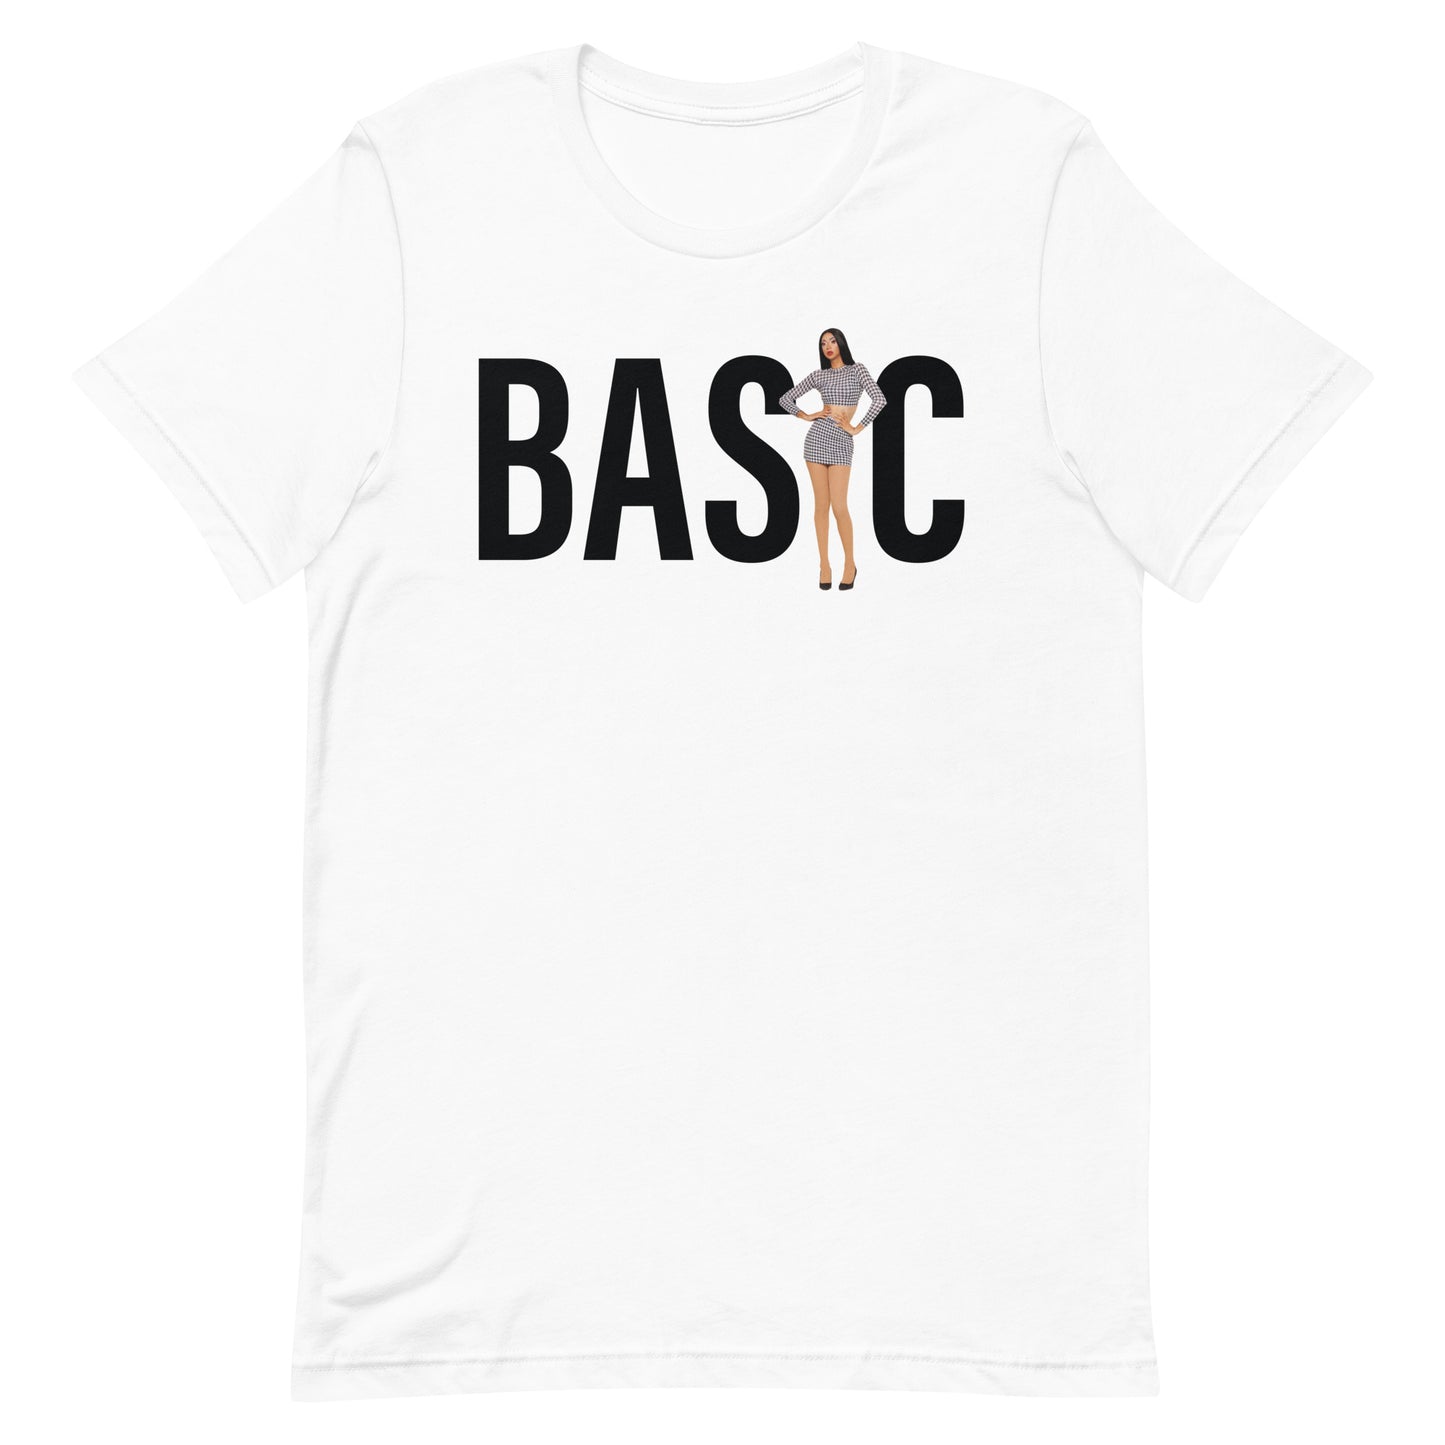 Tia Kofi Basic T-shirt White